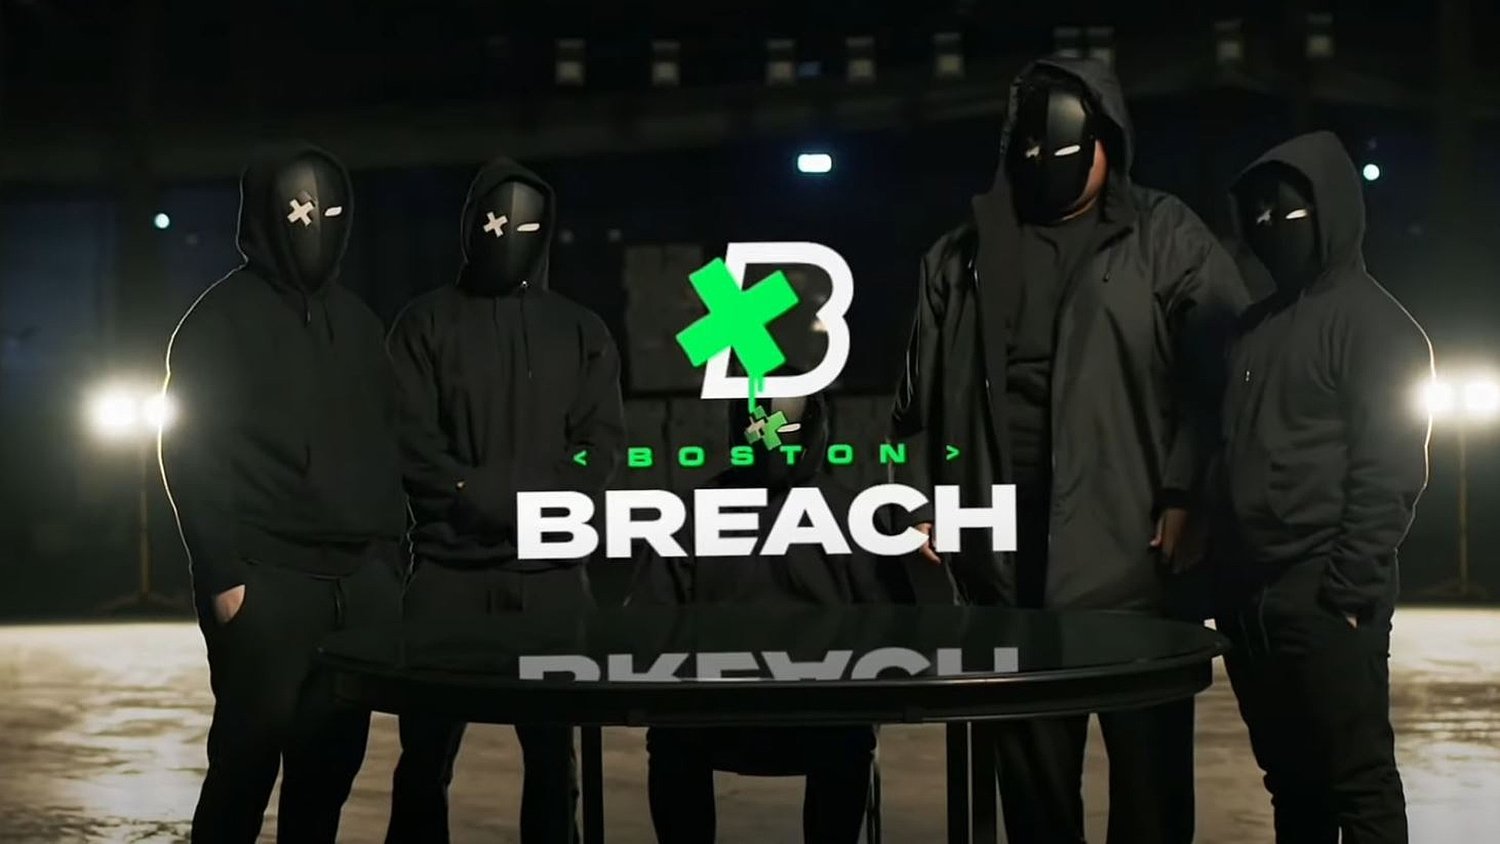 Boston Breach roster in Breach Mask behind Boston Breach logo